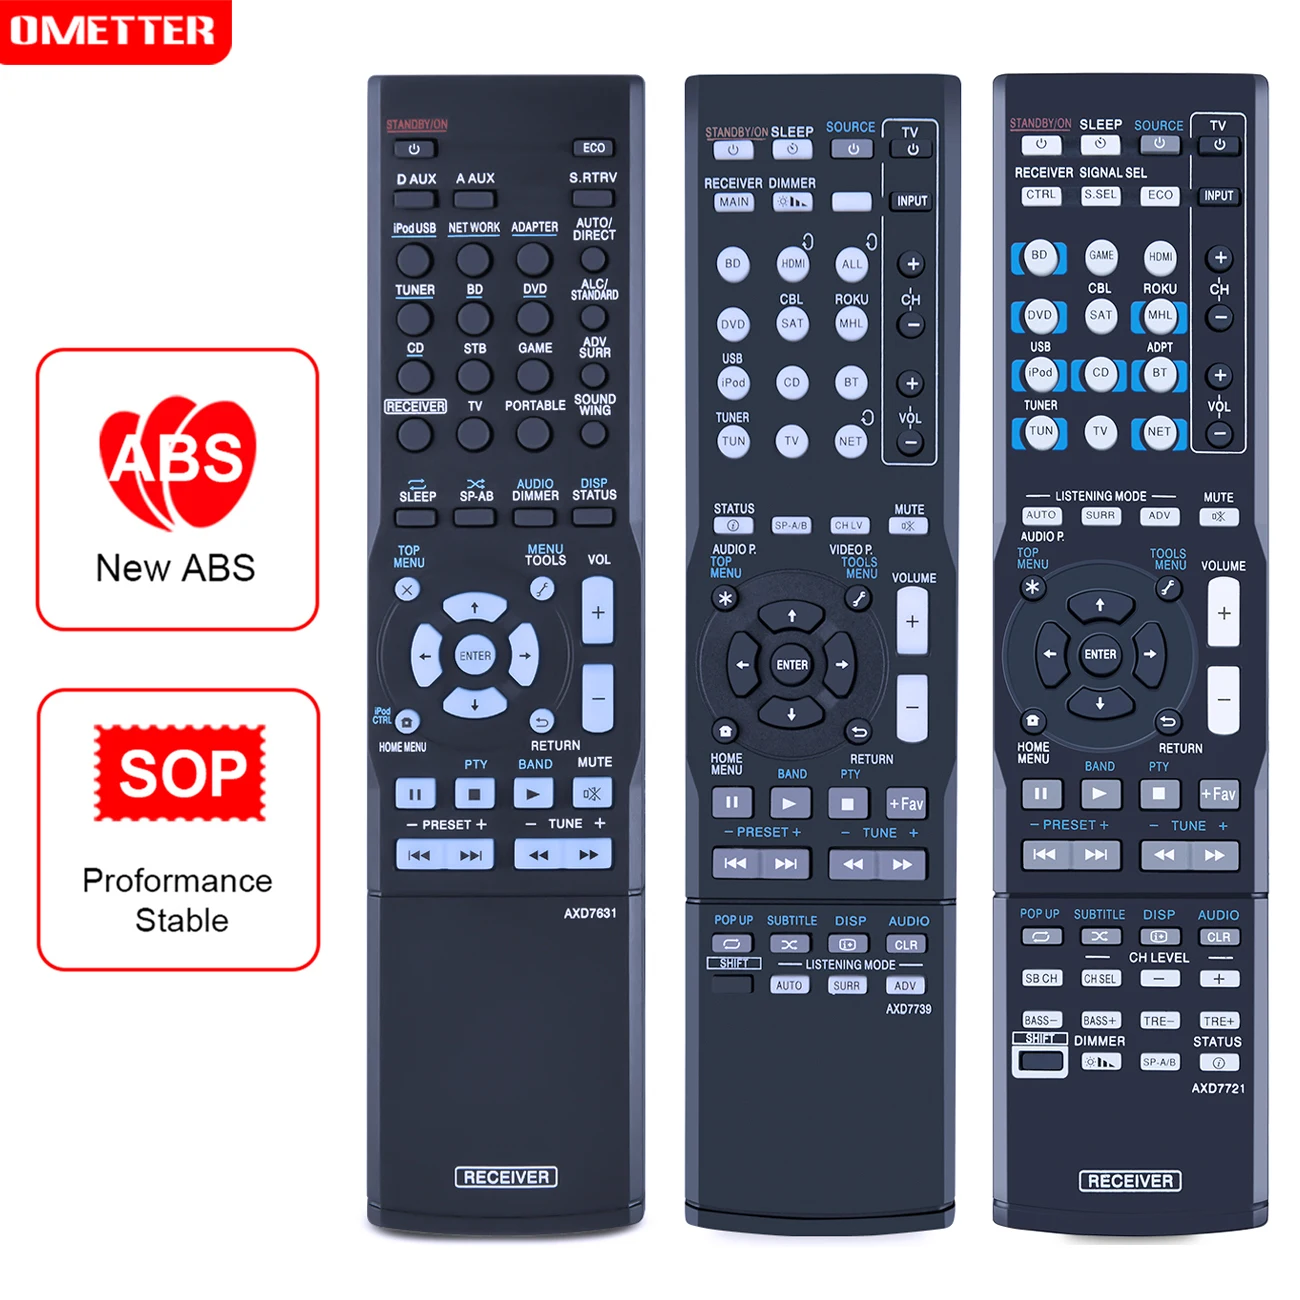 AXD7721 AXD7739 AXD7631 Remote Control for Pioneer AV Receiver AXD7587 VSX-1018AH-K 21TXH 9130TXH  830 45 830 90 S300 S310